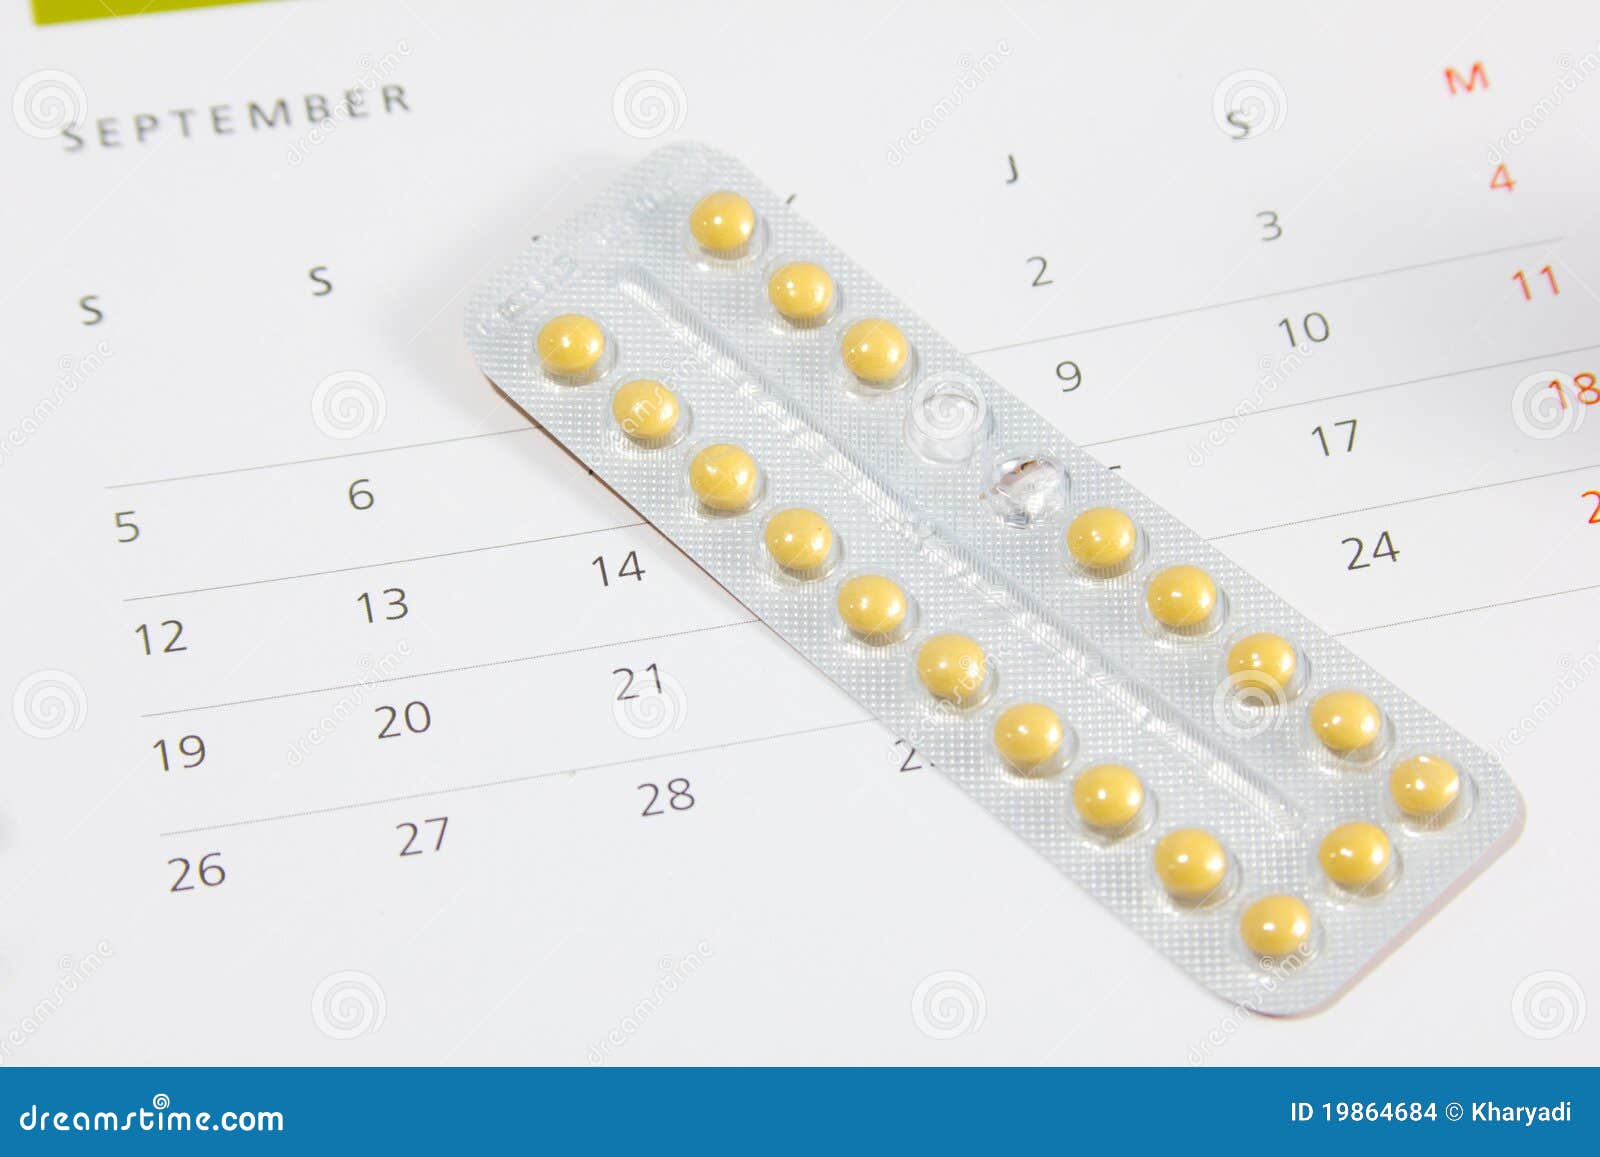 contraceptive pills on a calendar.